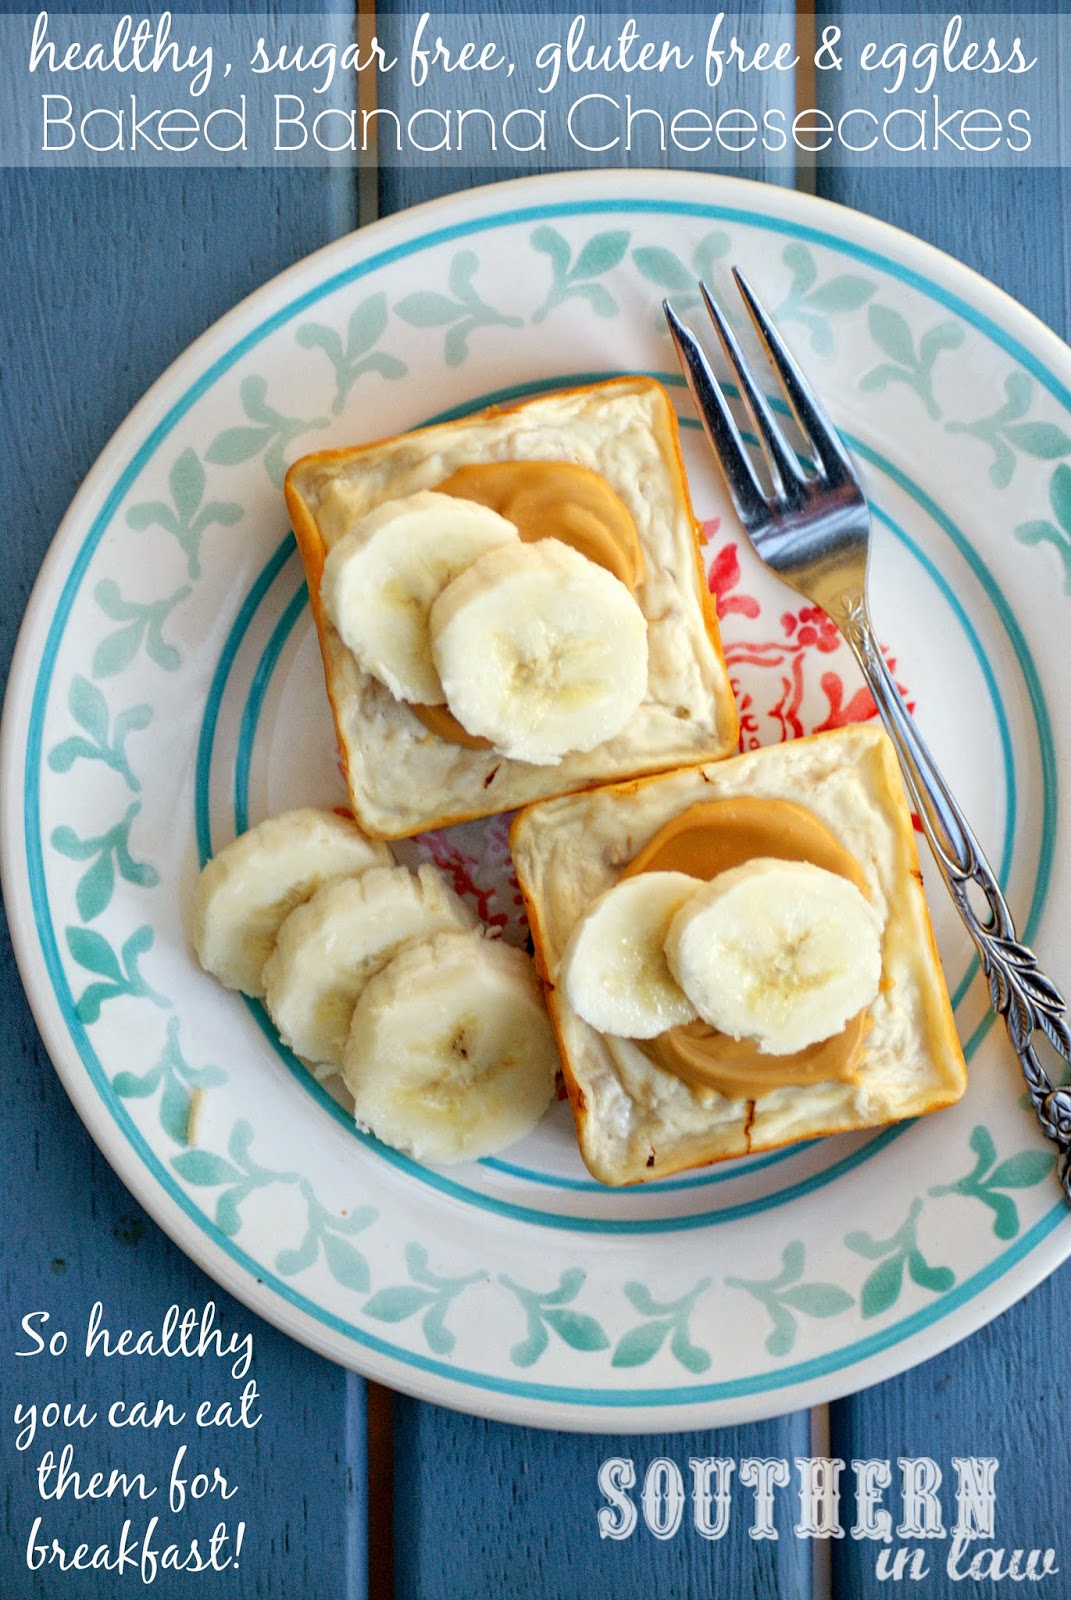 Healthy Baked Banana Cheesecakes Recipe - Breakfast Cheesecakes - Gluten free, sugar free, egg free, eggless